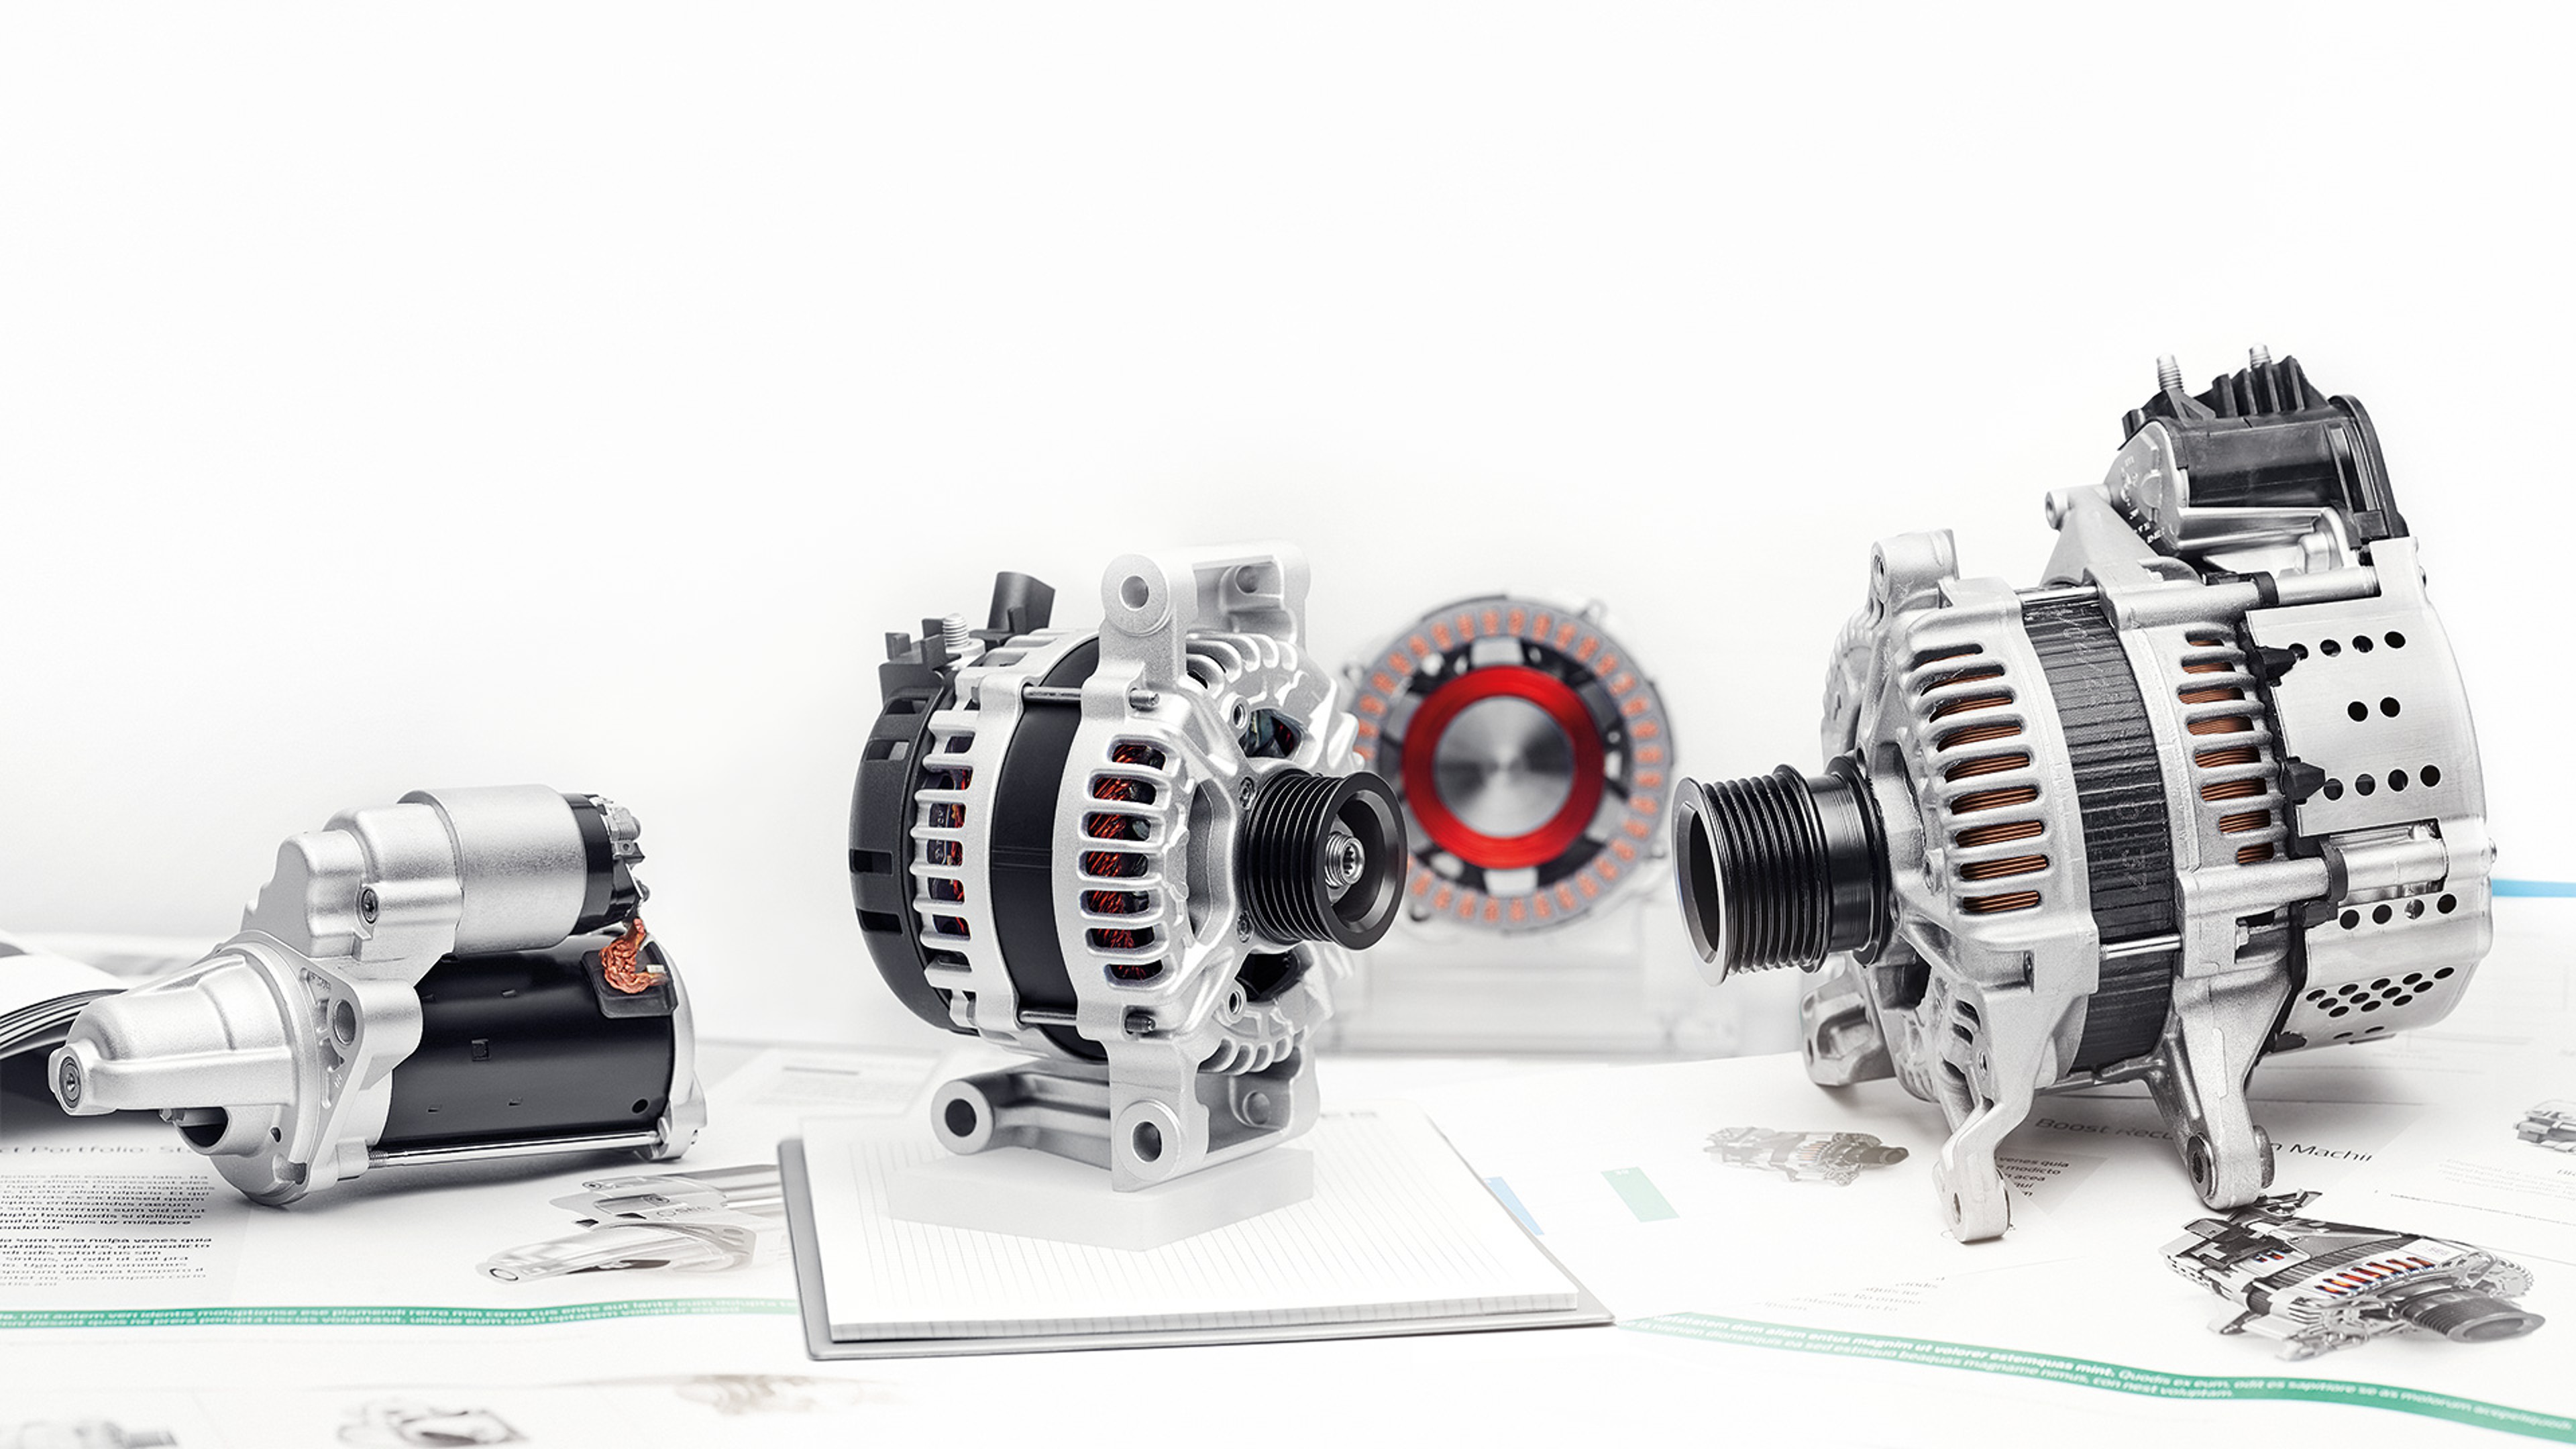 C60 starter motor, Power Density Line alternator and 48V Boost Recuperation Machine (BRM)